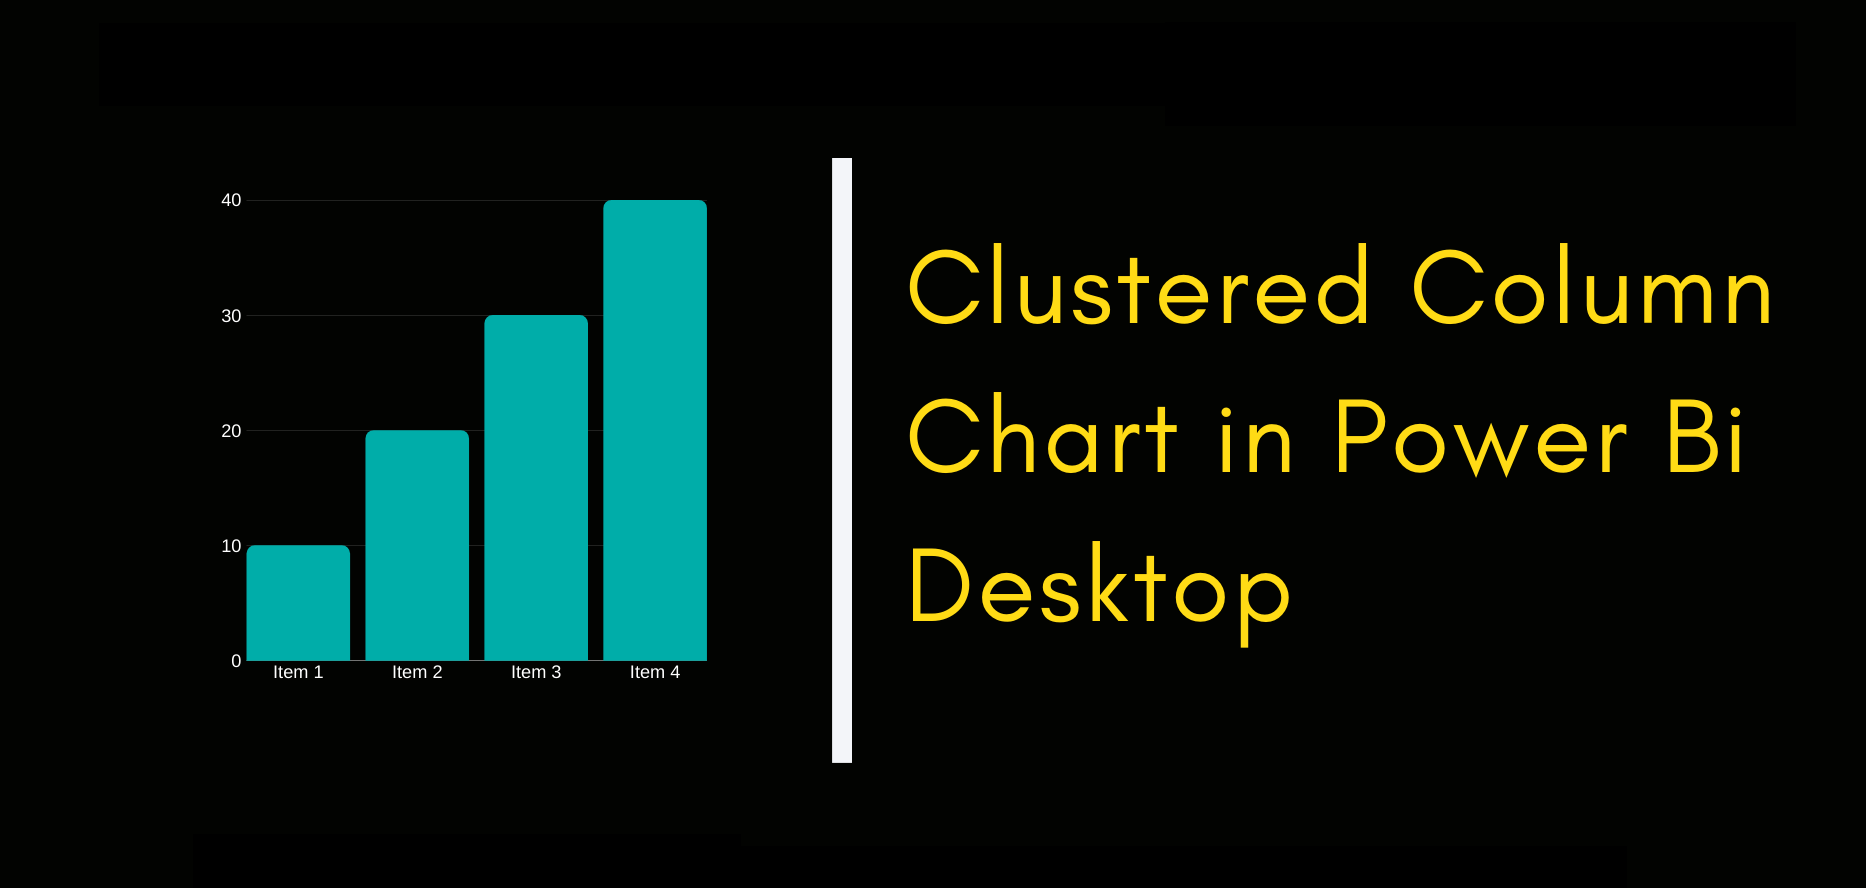 Clustered Column Chart in Power Bi Desktop